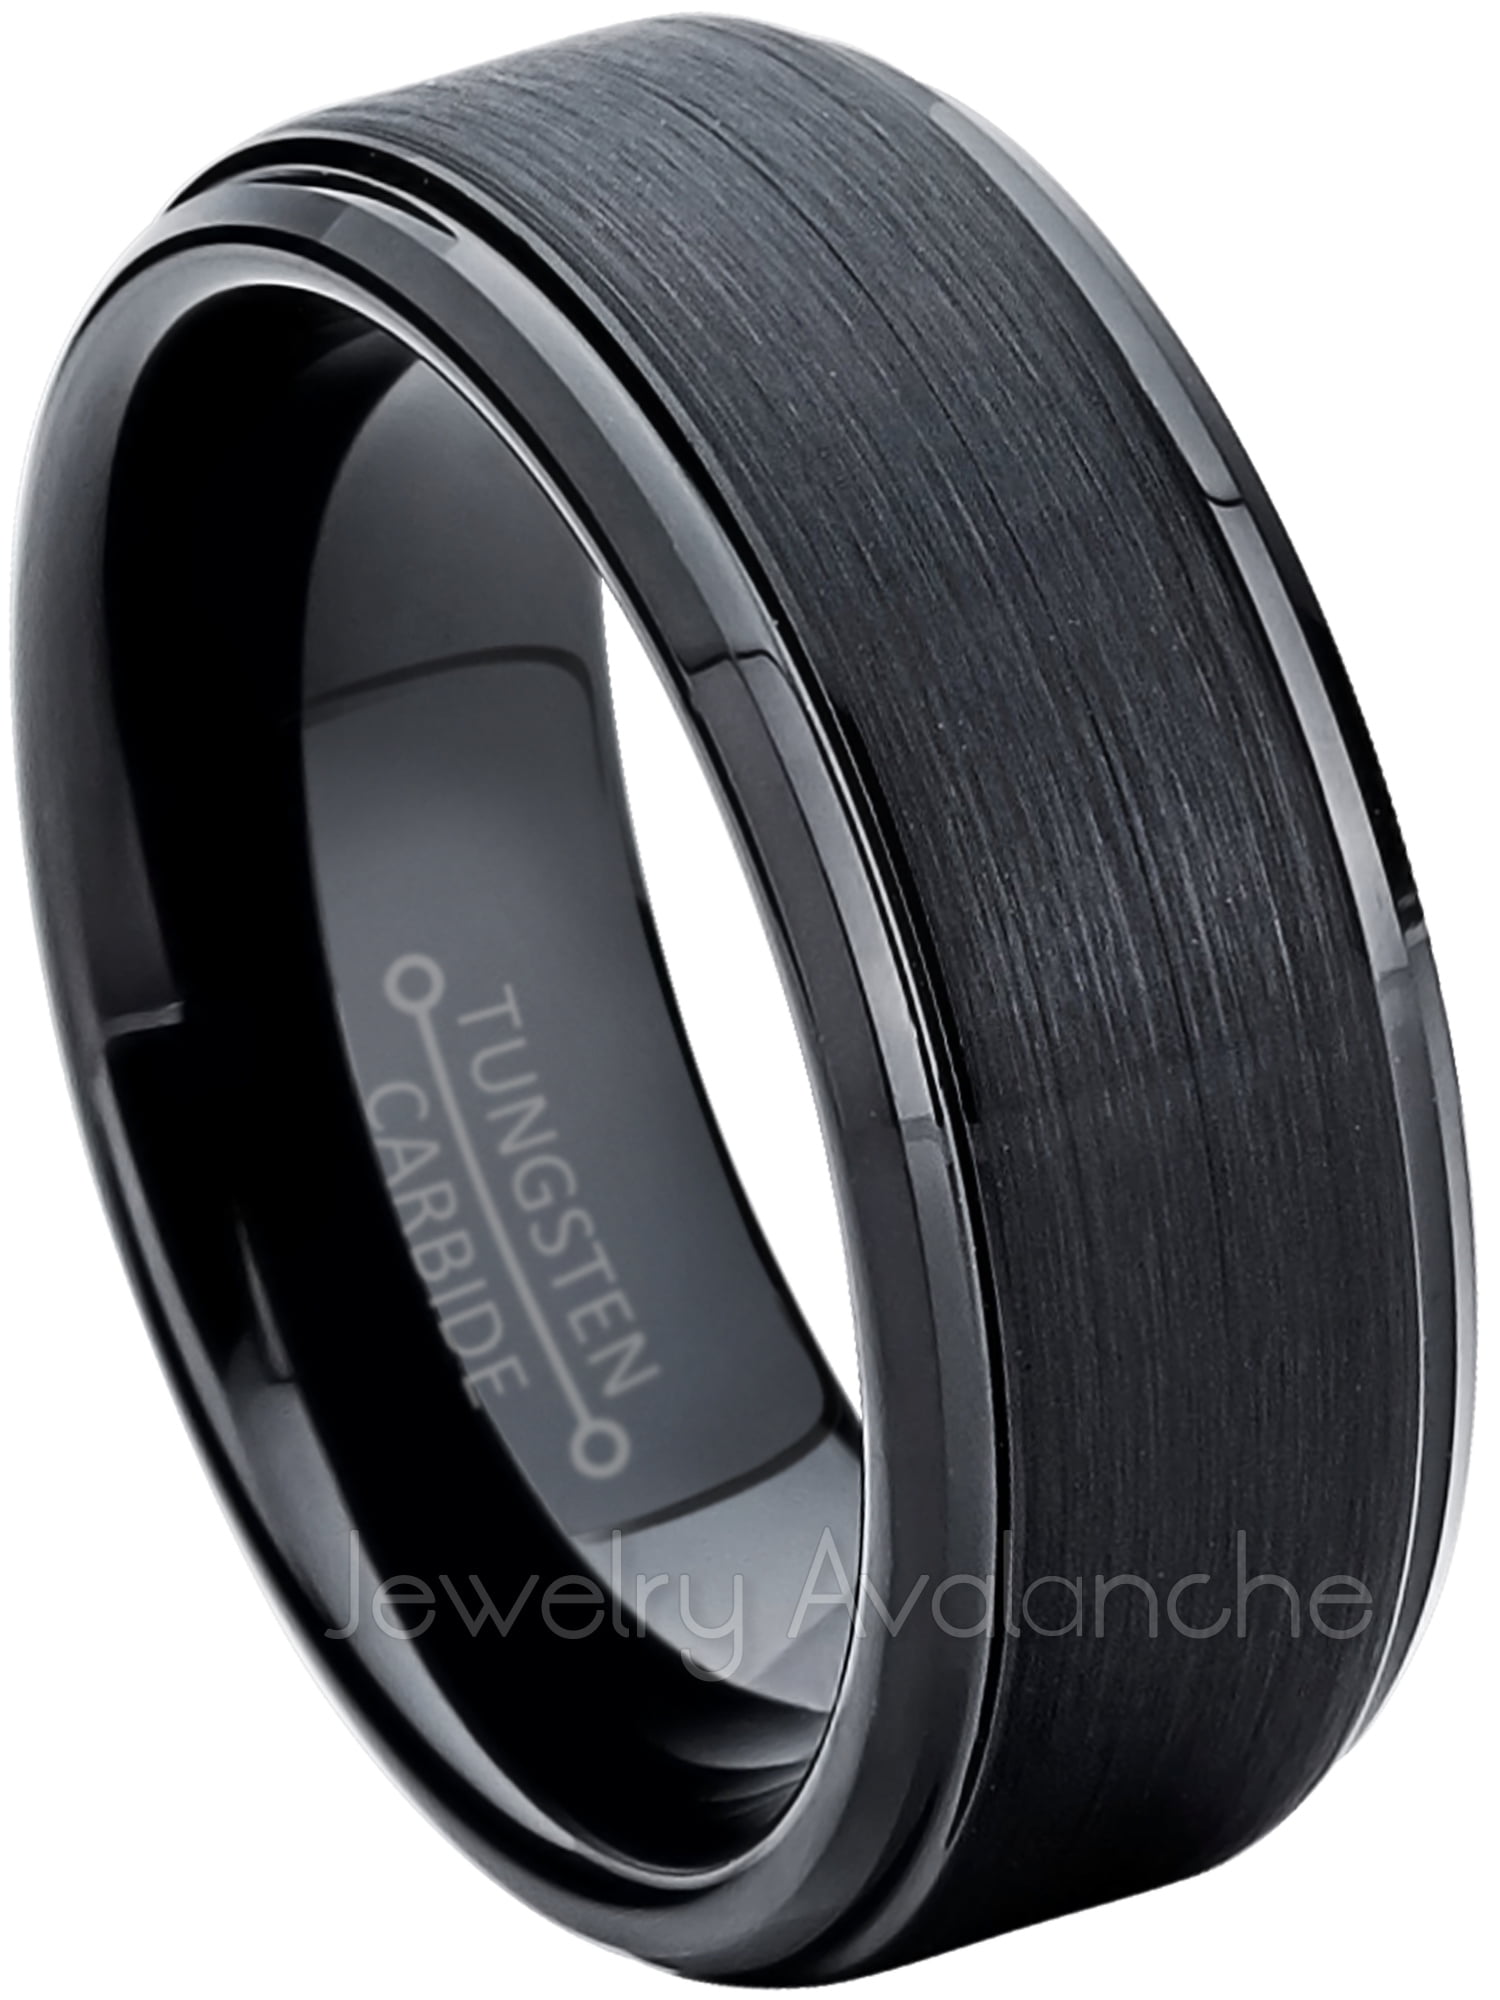 0.07ct Diamond Cobalt Ring Jewelry Avalanche 8MM Comfort Fit Brushed Black Ion Beveled Edge Mens Cobalt Chrome Wedding Band